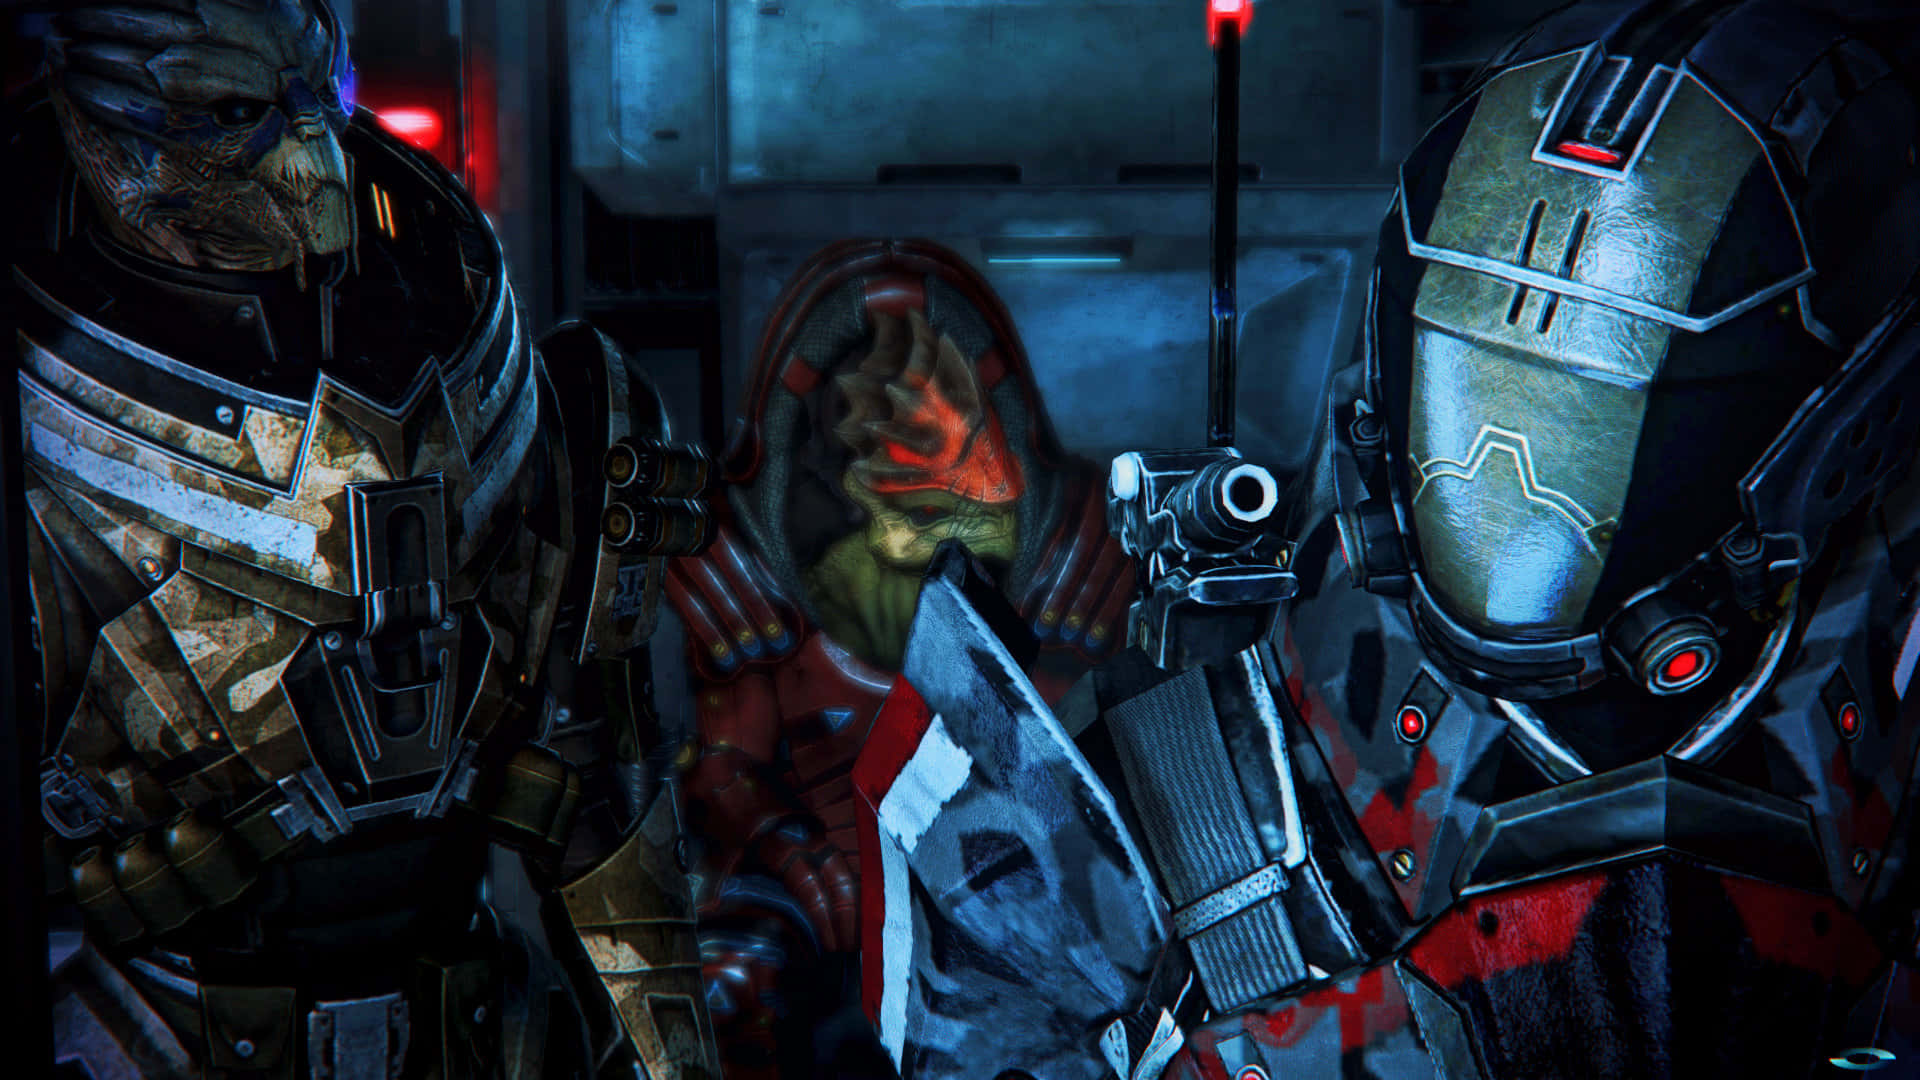 Mass Effect Multiplayer Action Scene Wallpaper